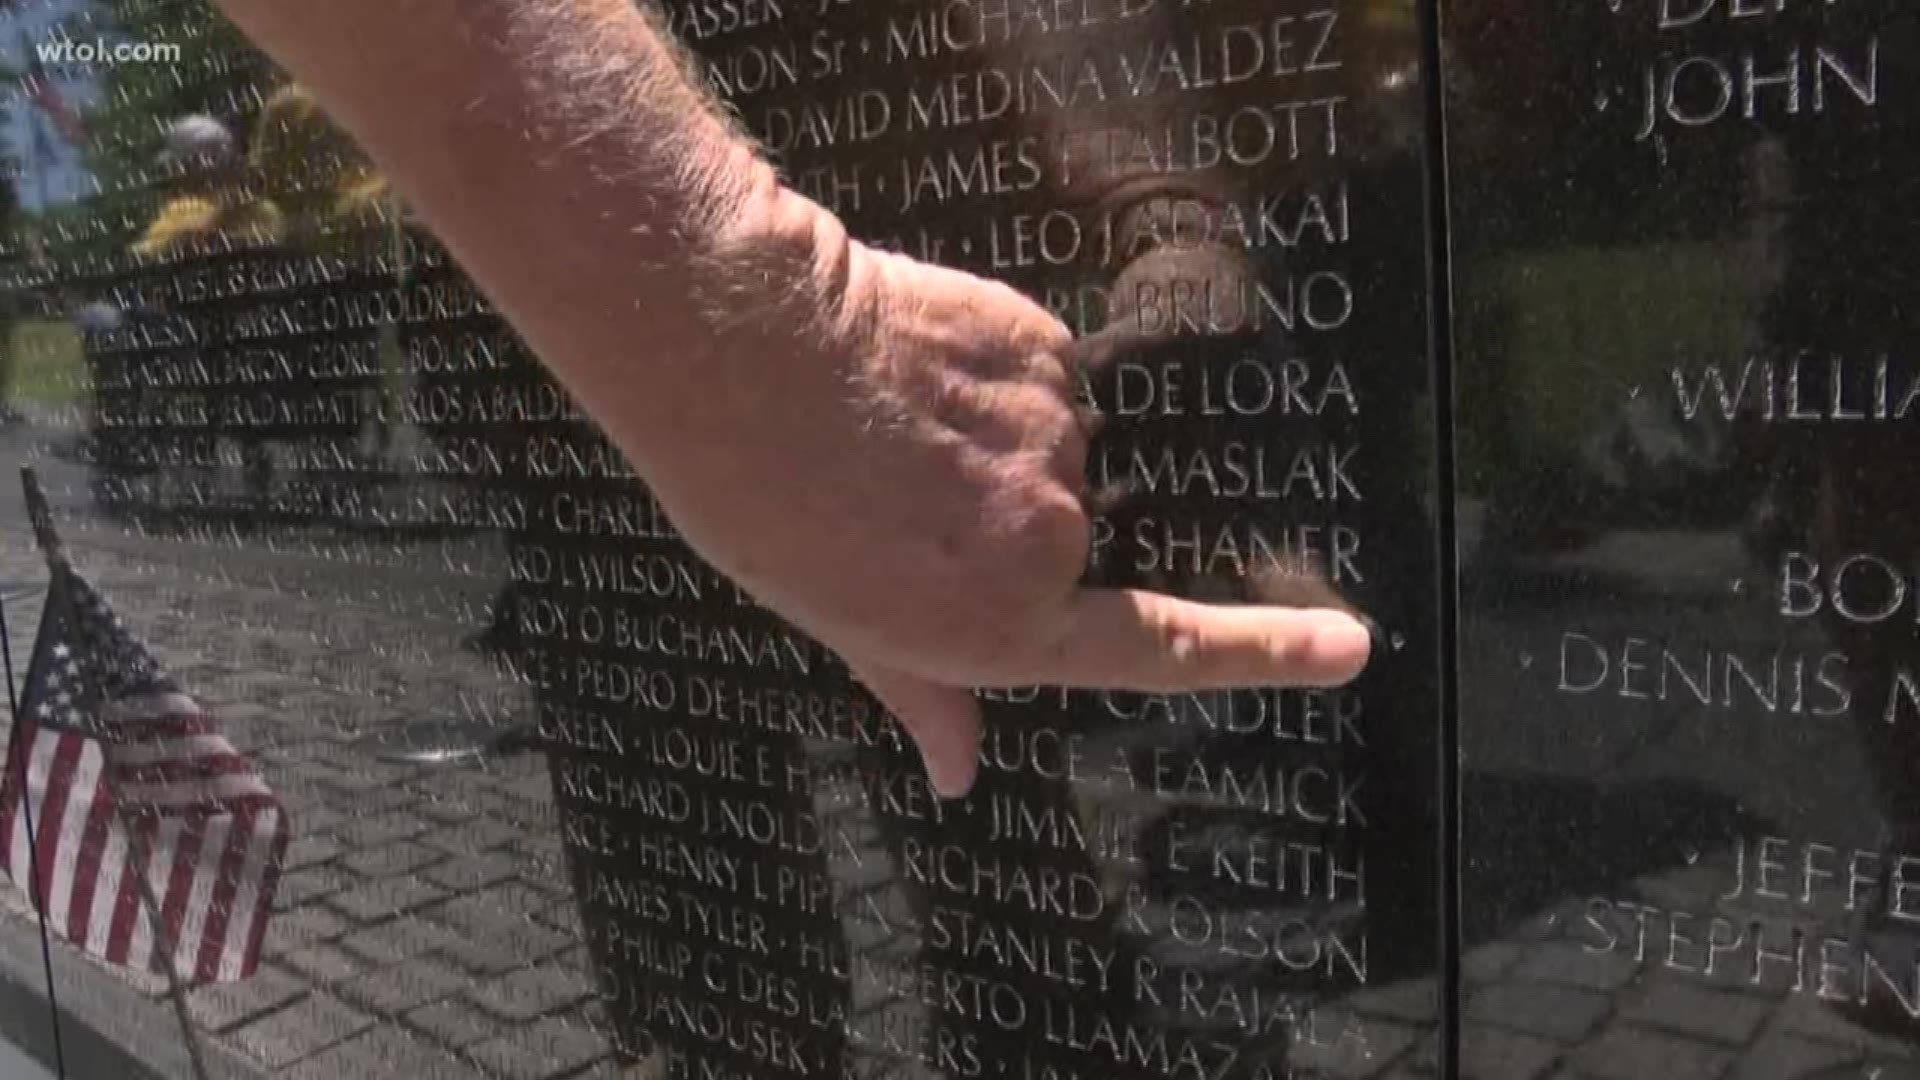 Vietnam War veteran from northwest Ohio remembers fallen friend in emotional trip.